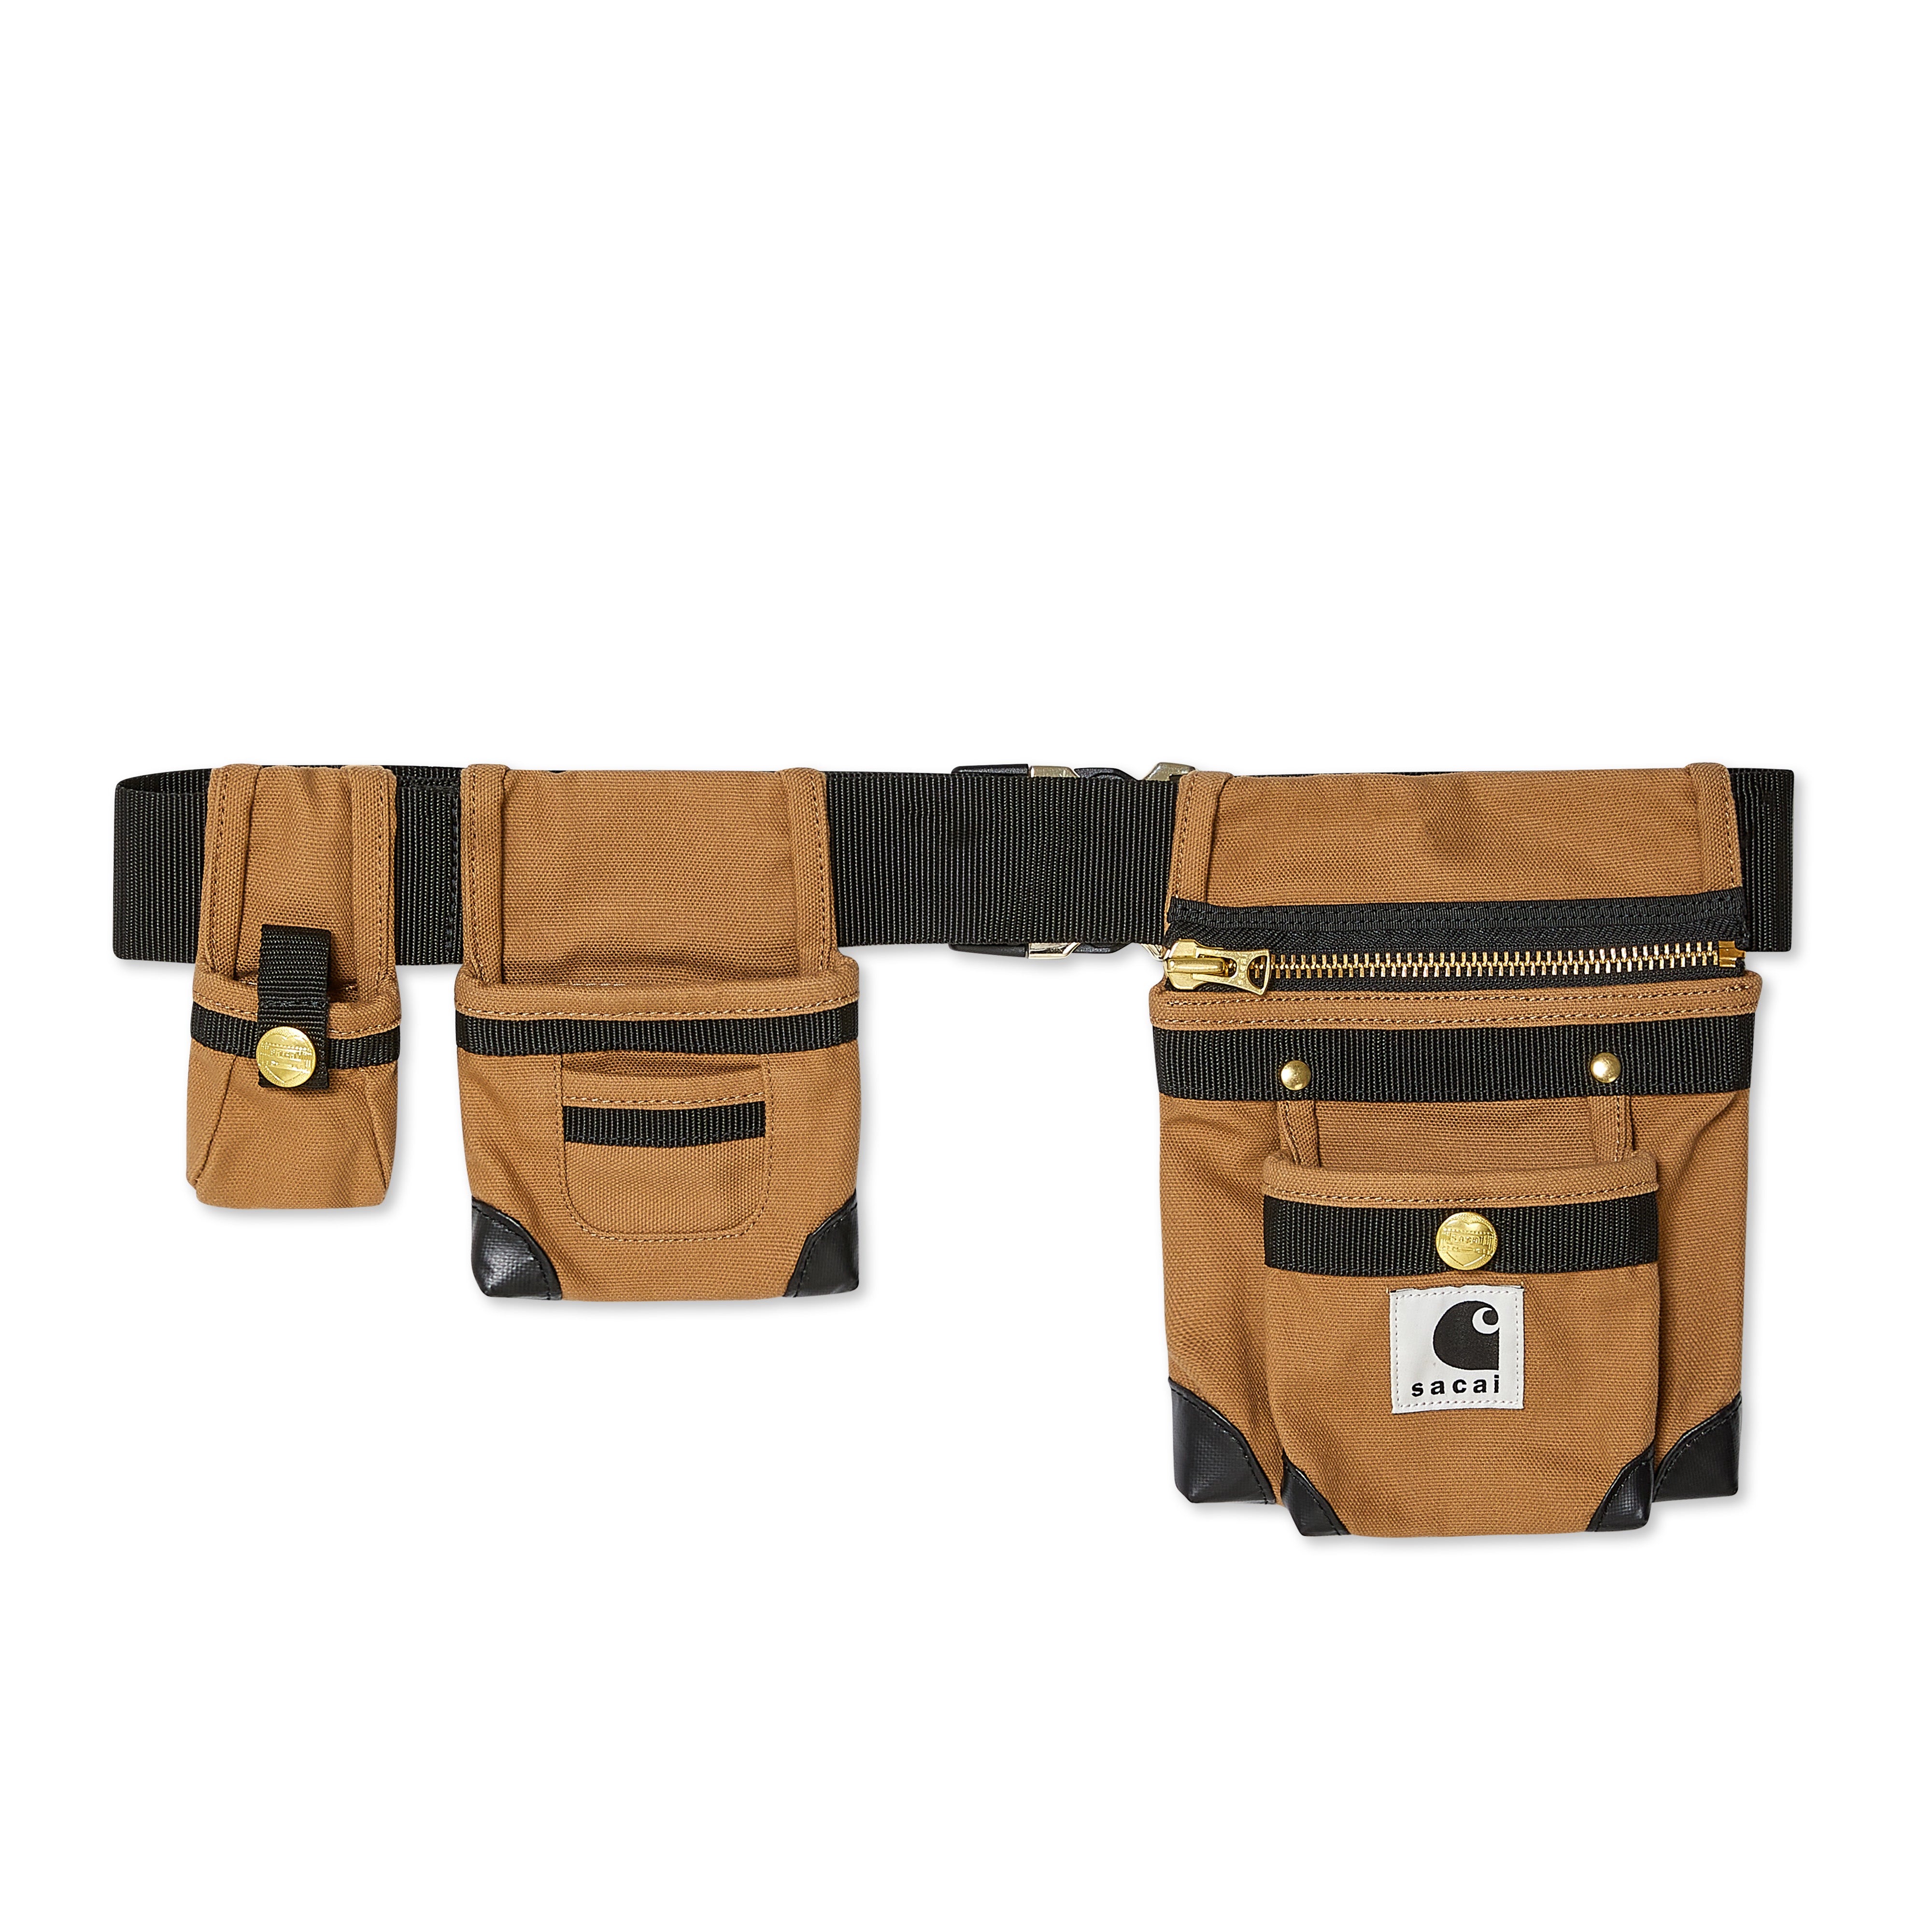 sacai - Carhartt WIP Pocket Bag - (Beige) | Dover Street Market E